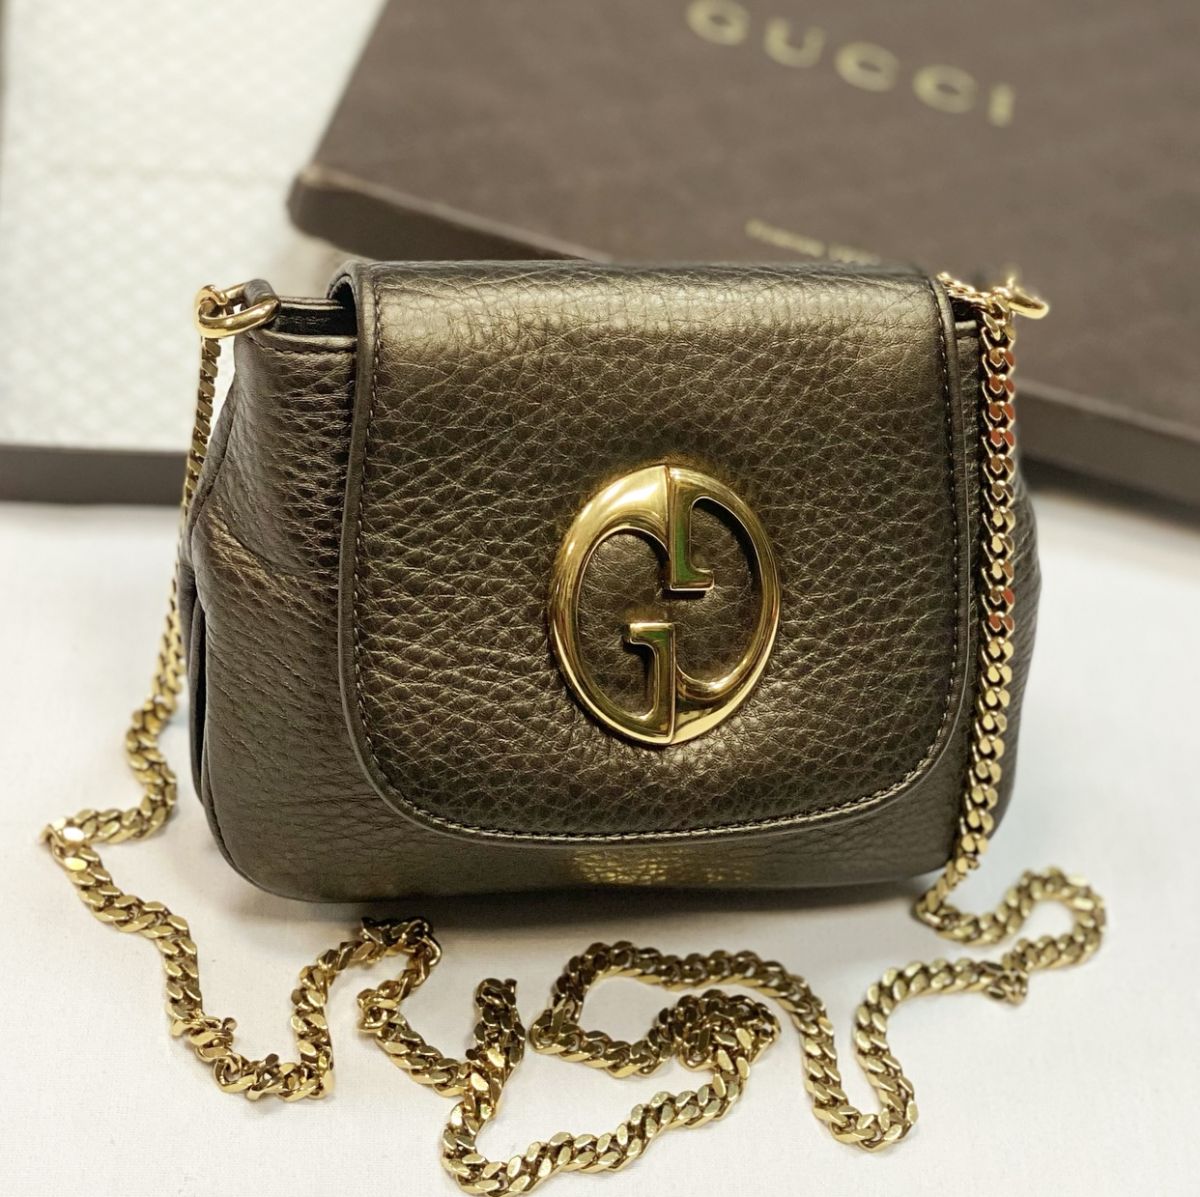 Сумка Gucci размер 16/14 цена 15 385 руб 